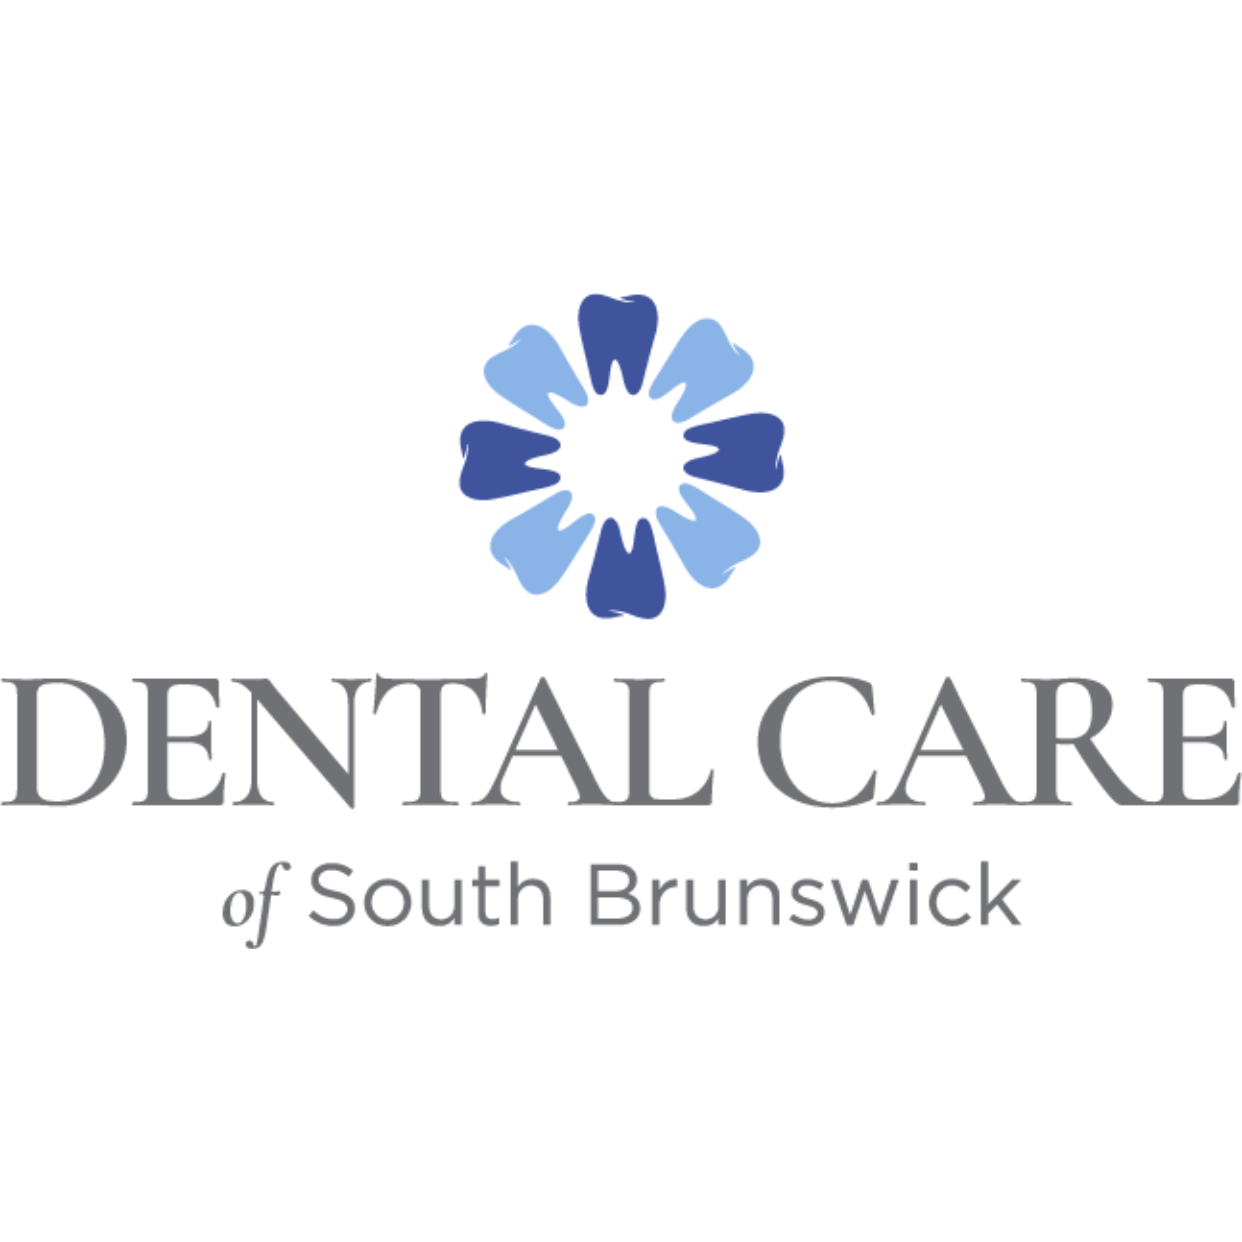 Dental Care of South Brunswick 3538 NJ-27, Kendall Park New Jersey 08824